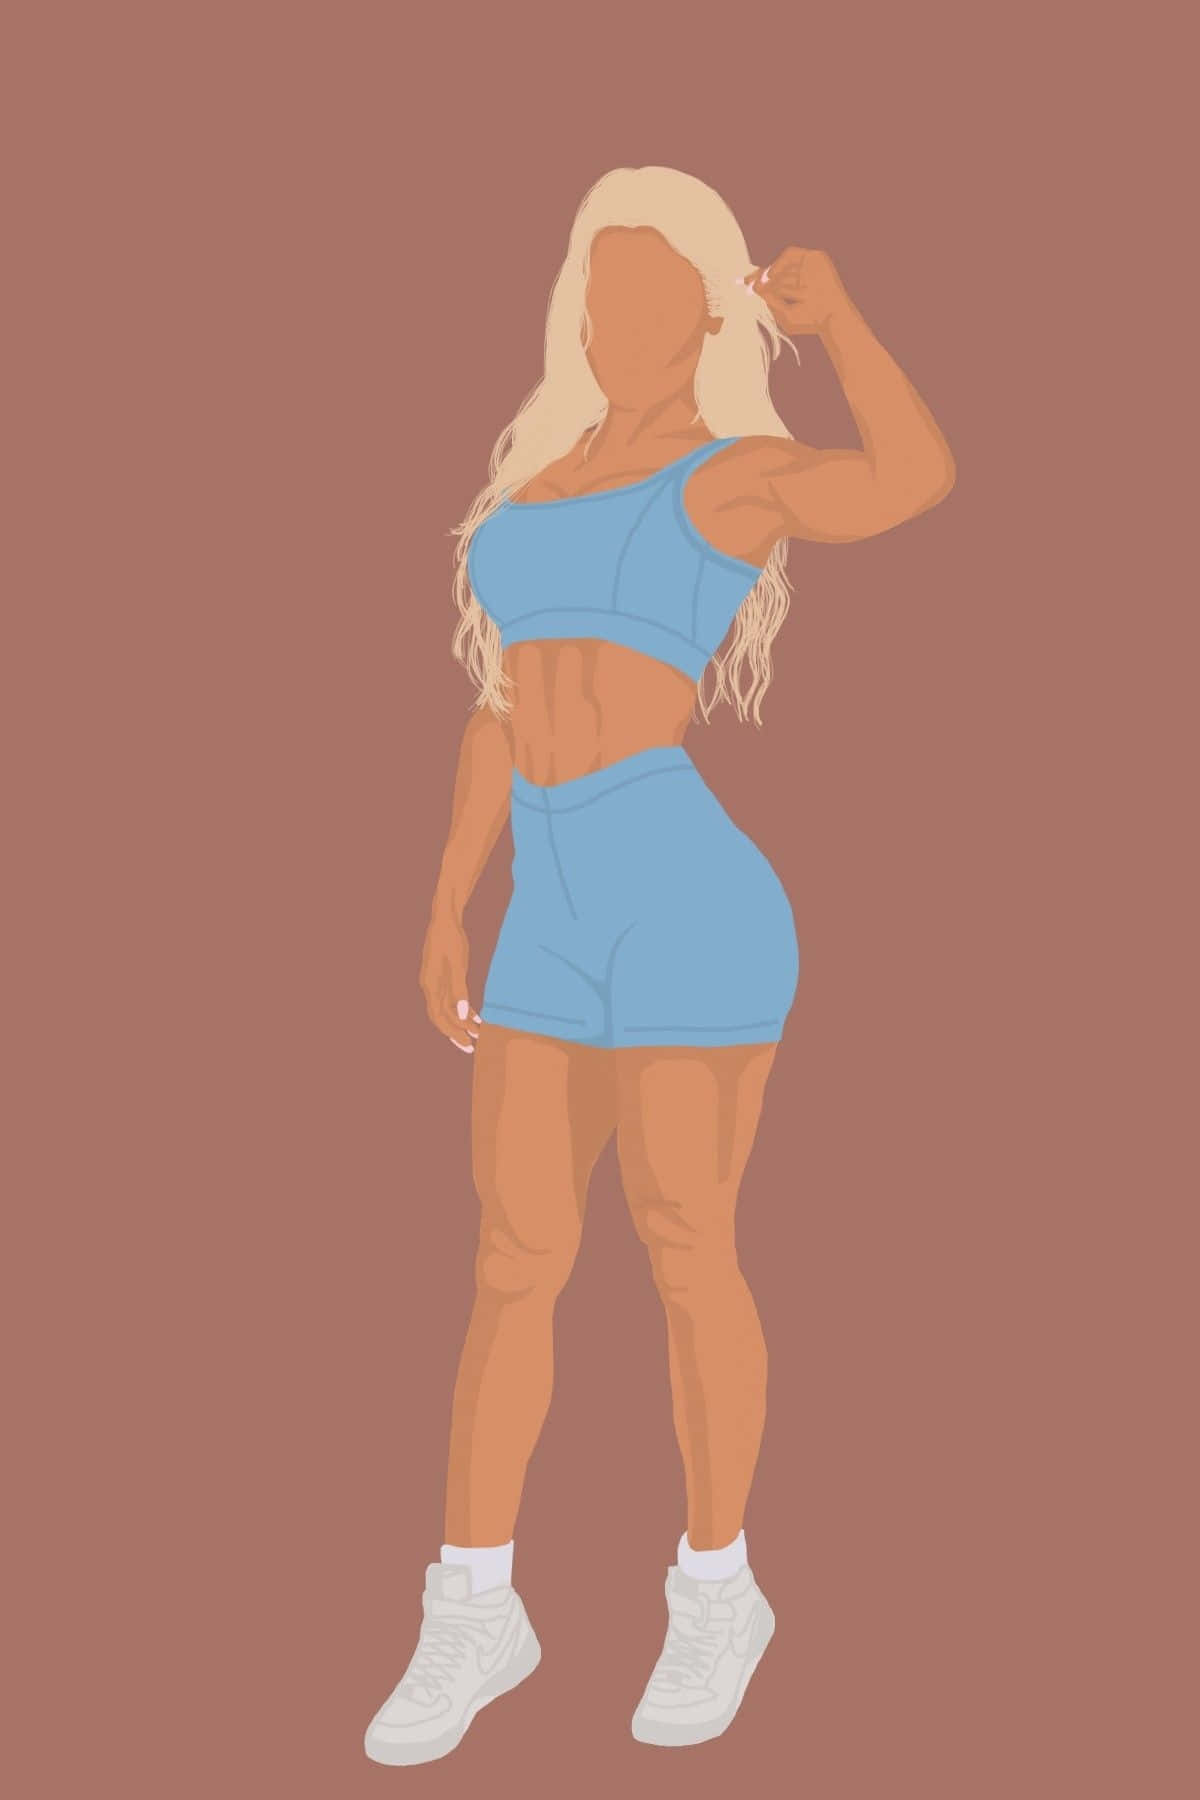 Blonde Fitness Model Illustration Wallpaper